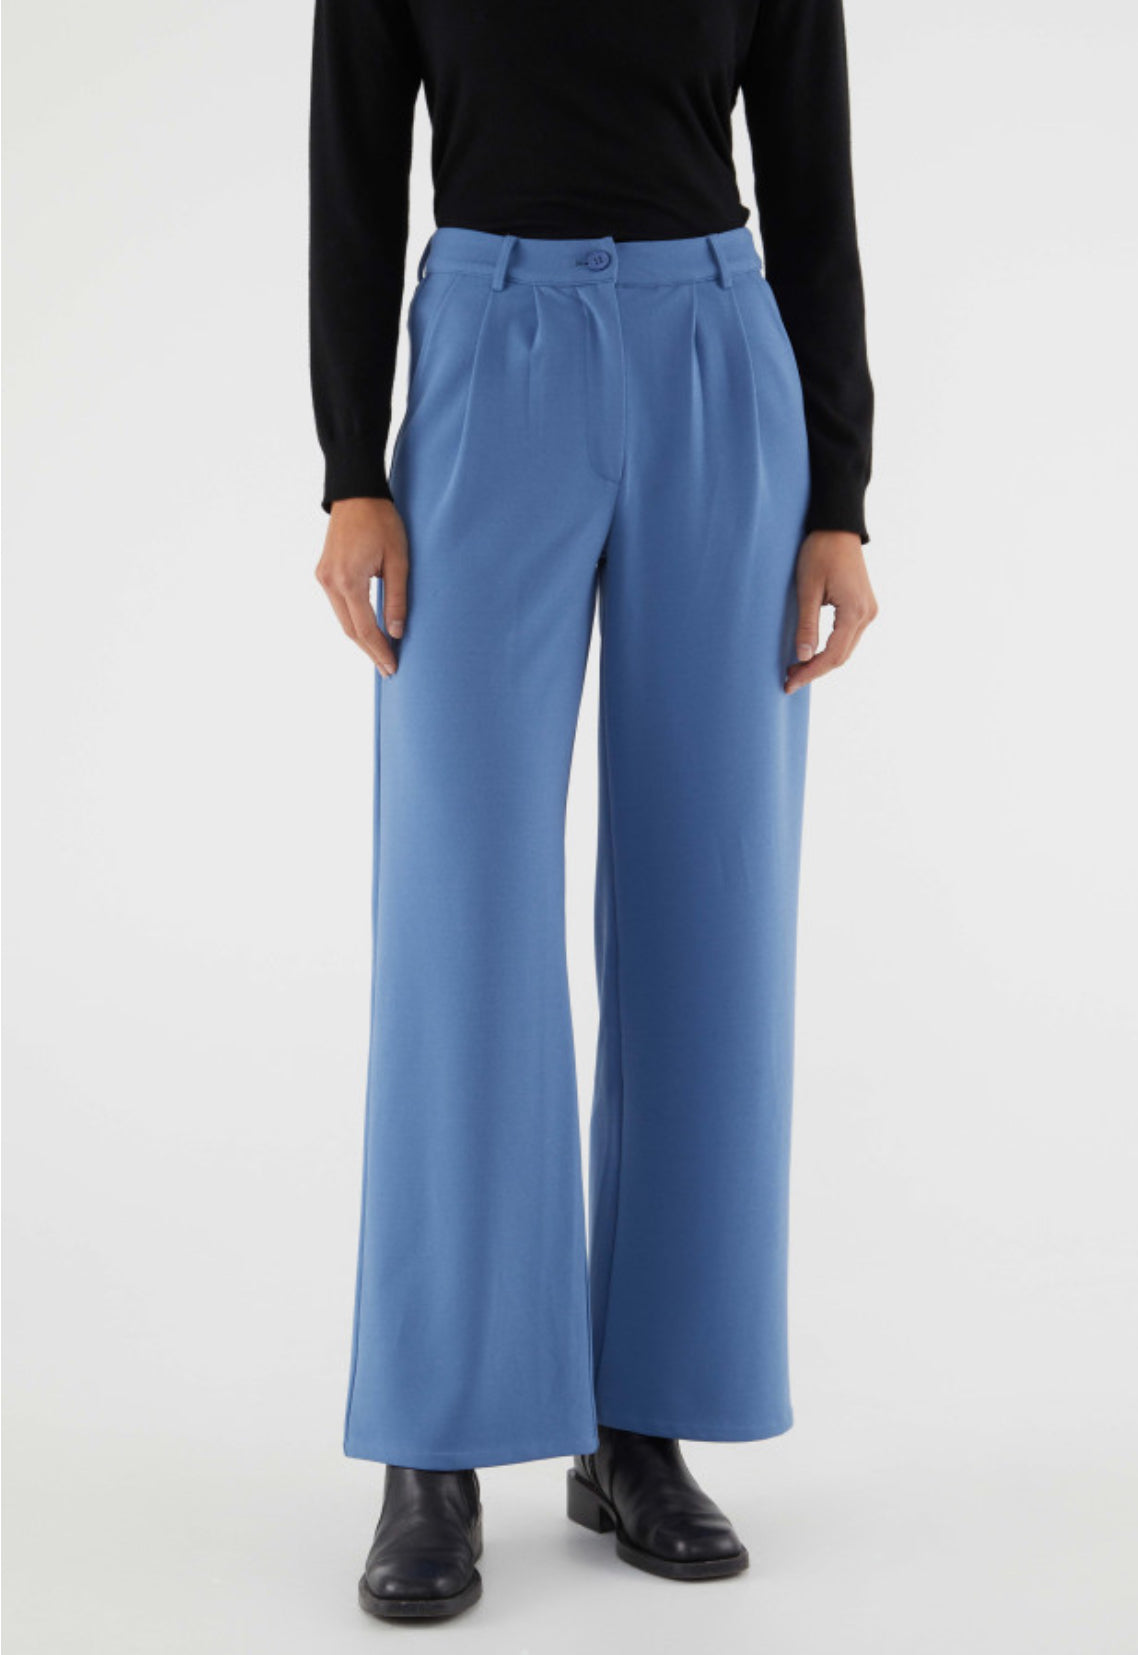 Blue dress pants with pleats